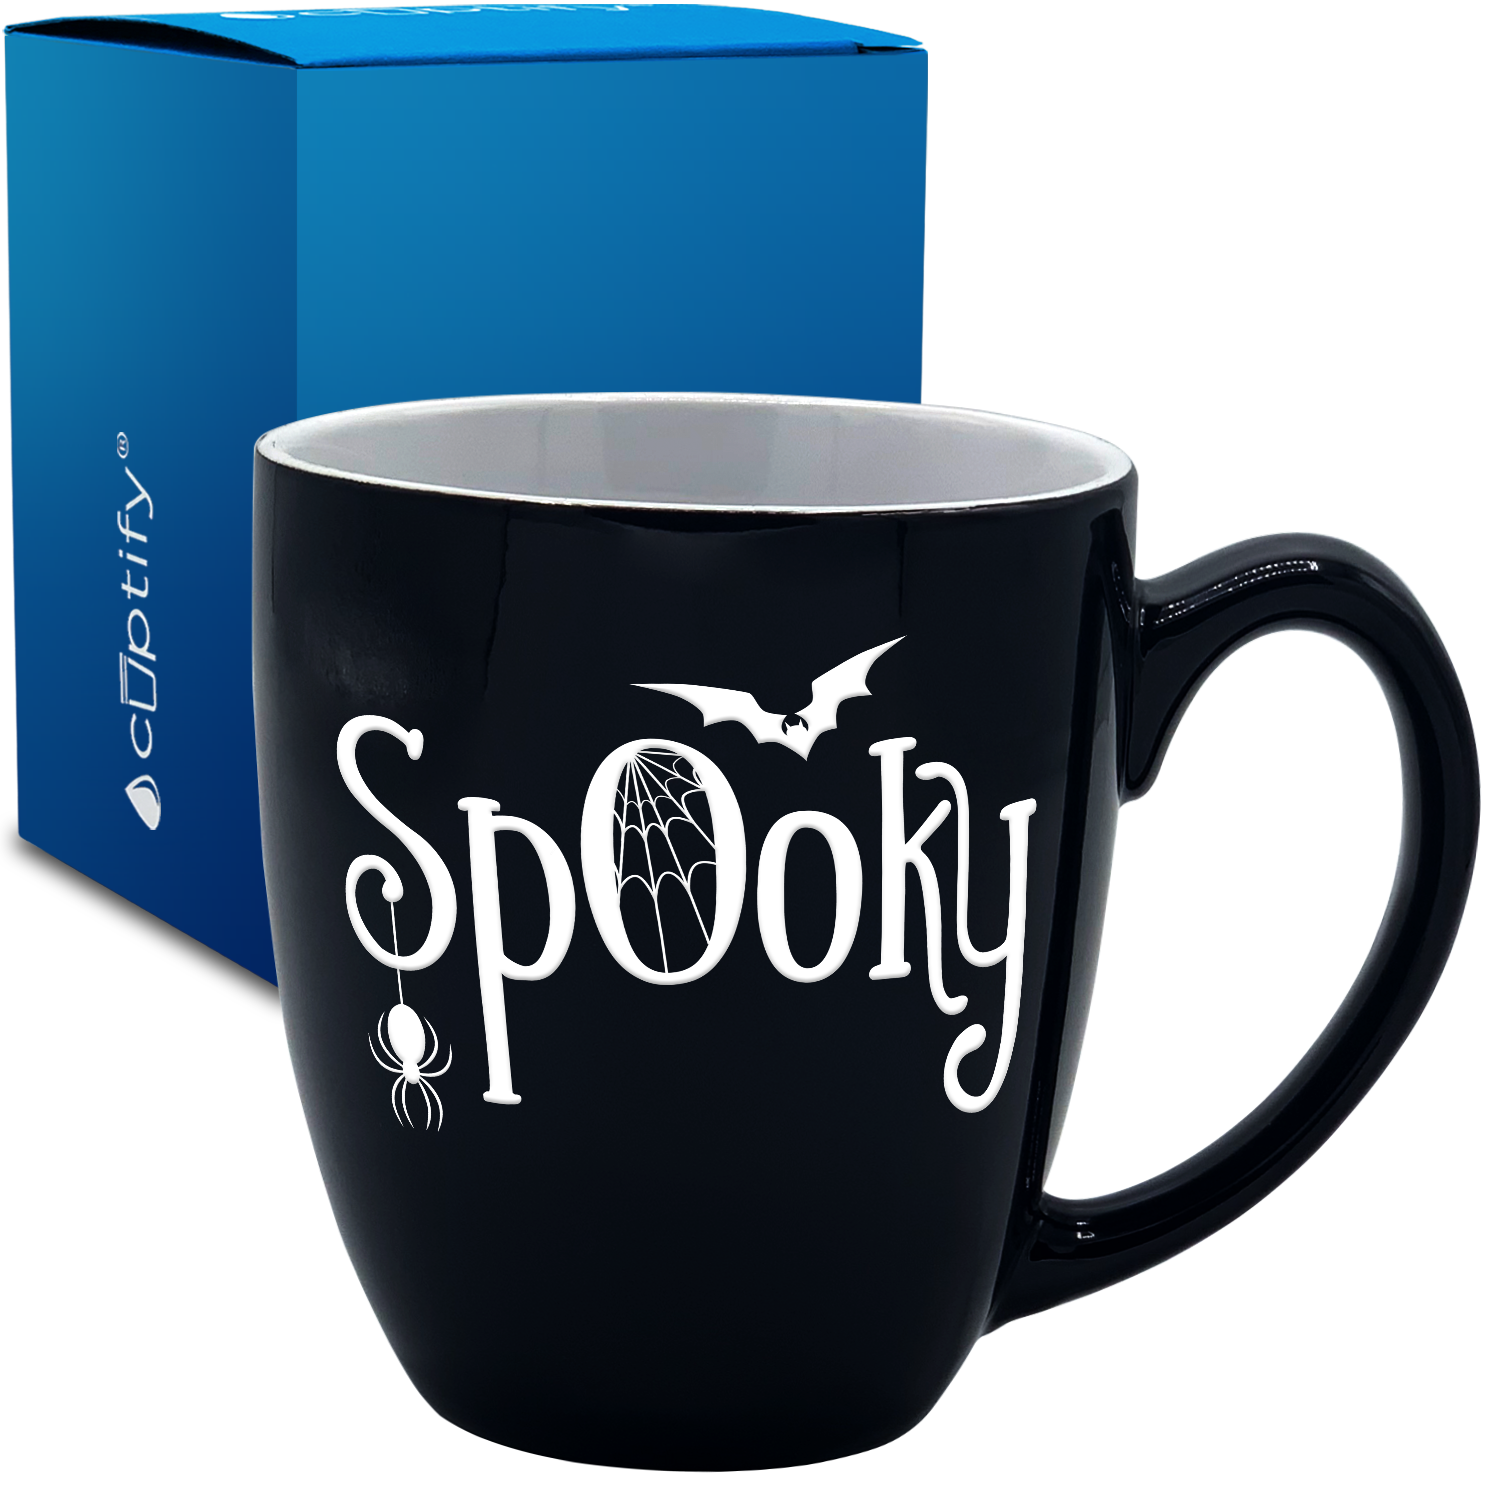 Spooky Black 16oz Halloween Bistro Coffee Mug